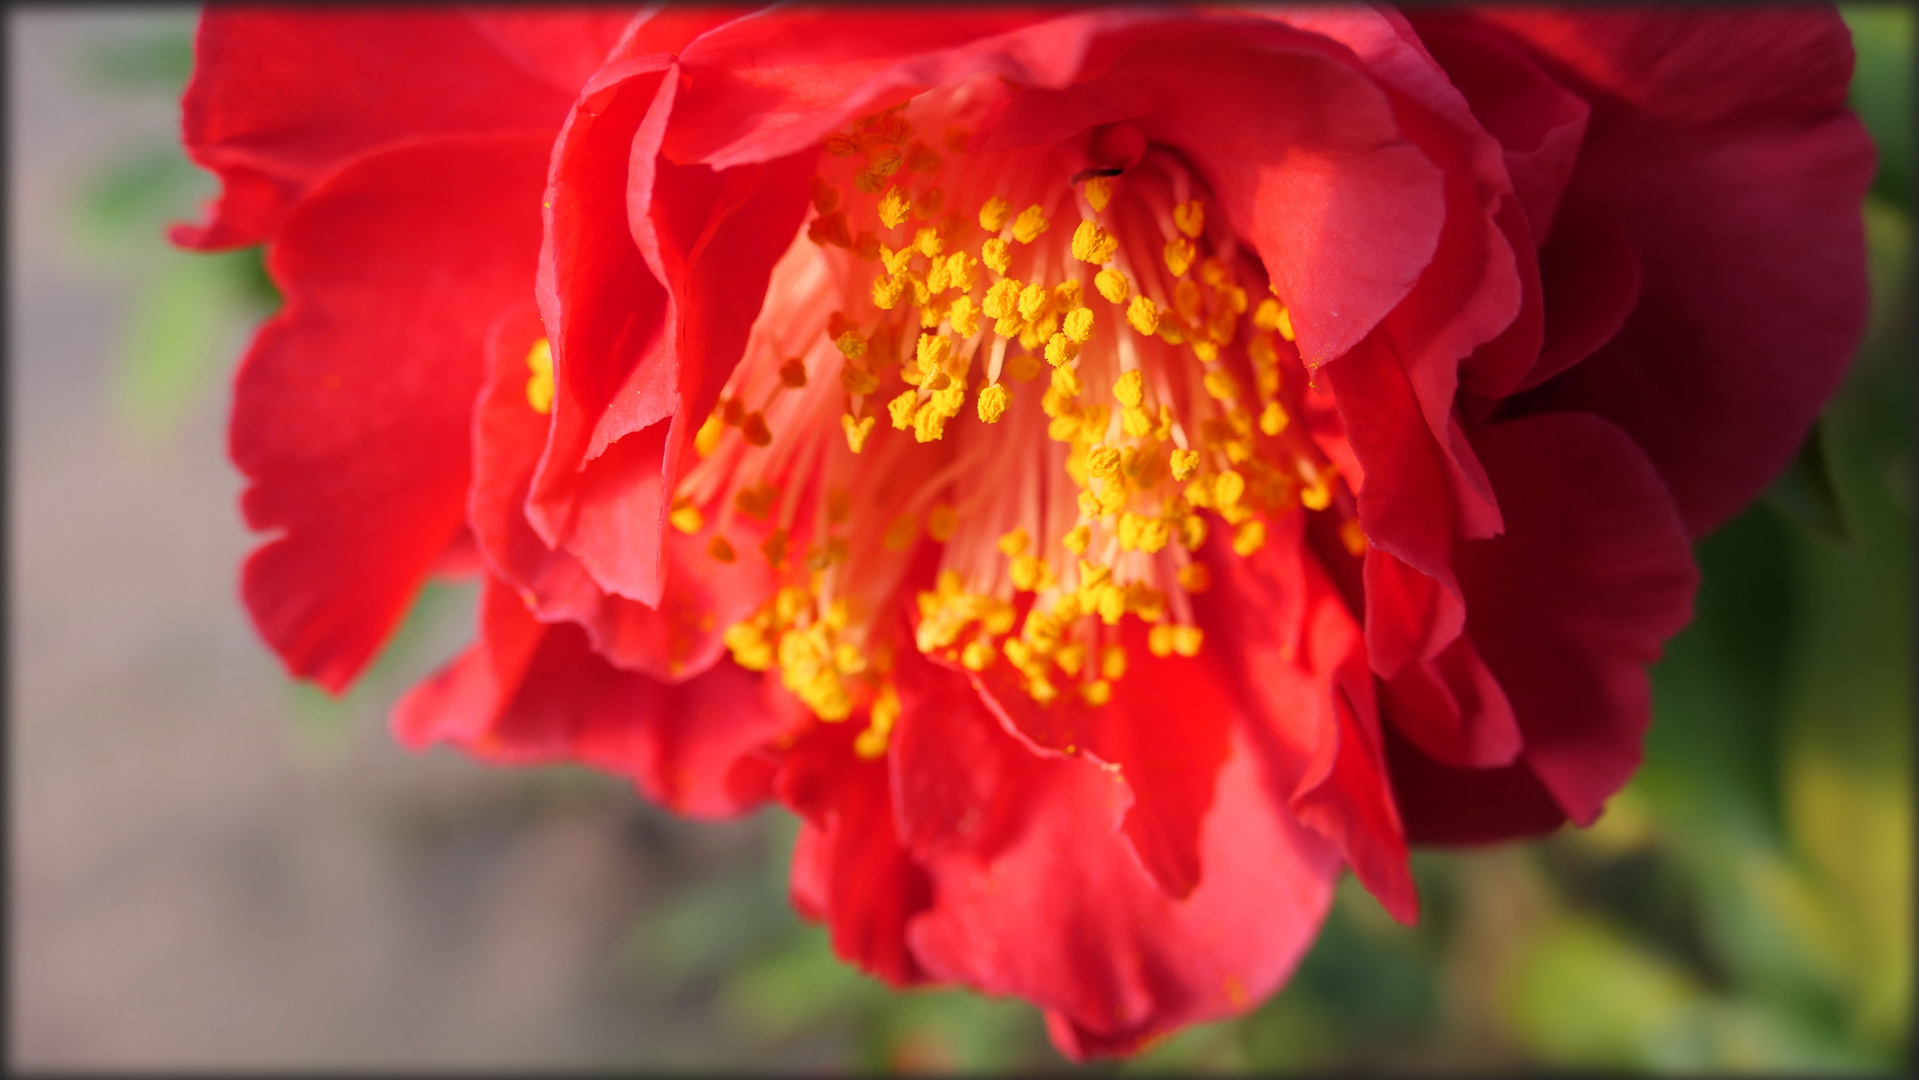 Camellia japonica 'Barbara Morgan' flower